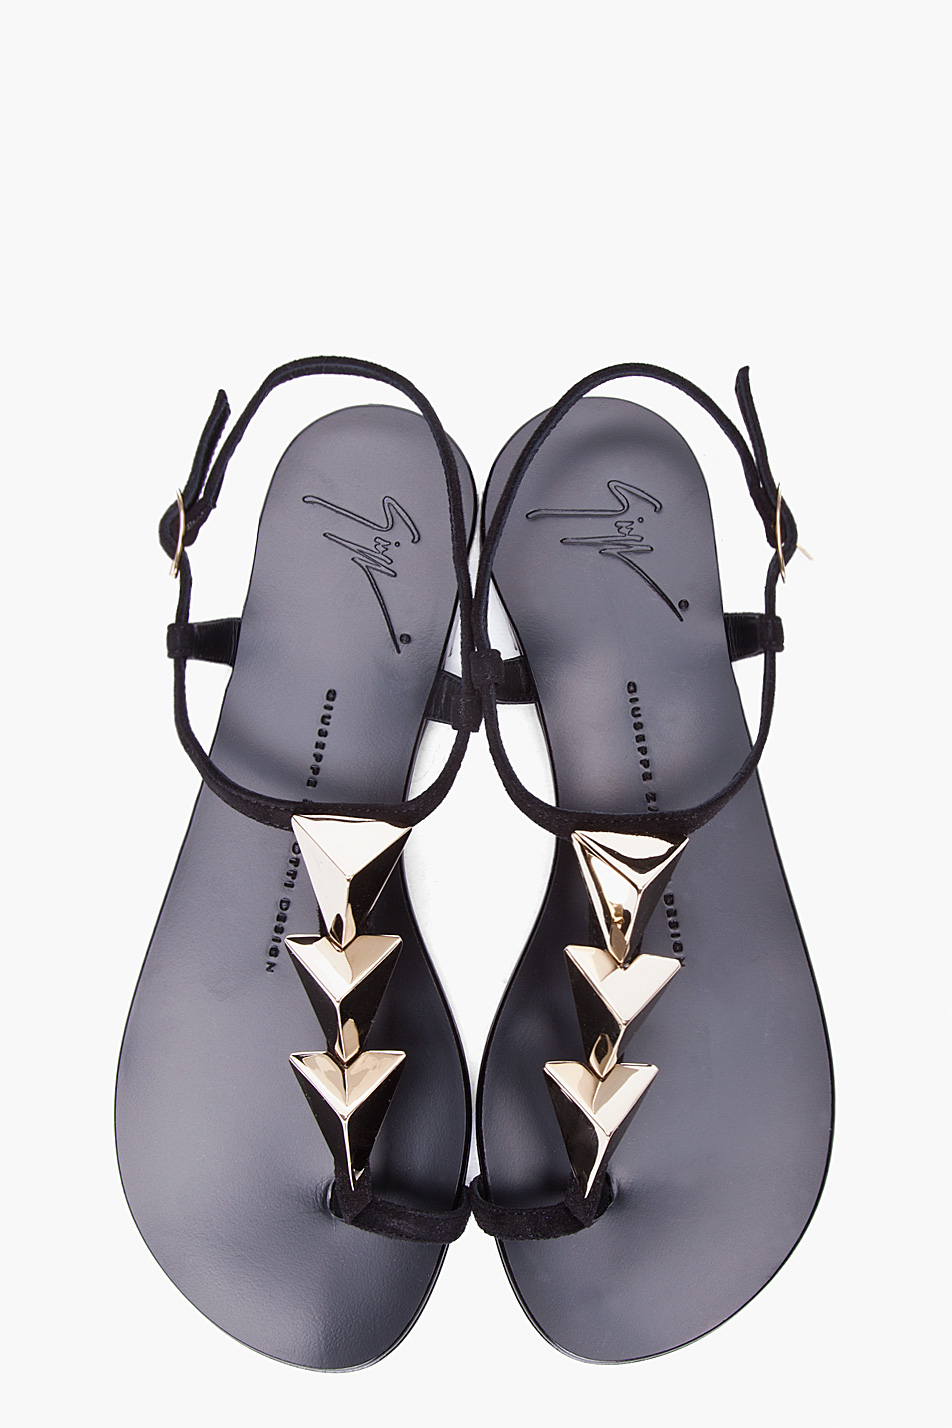 LUX Style: embellished sandals | LadyLUX - Online Luxury Lifestyle ...